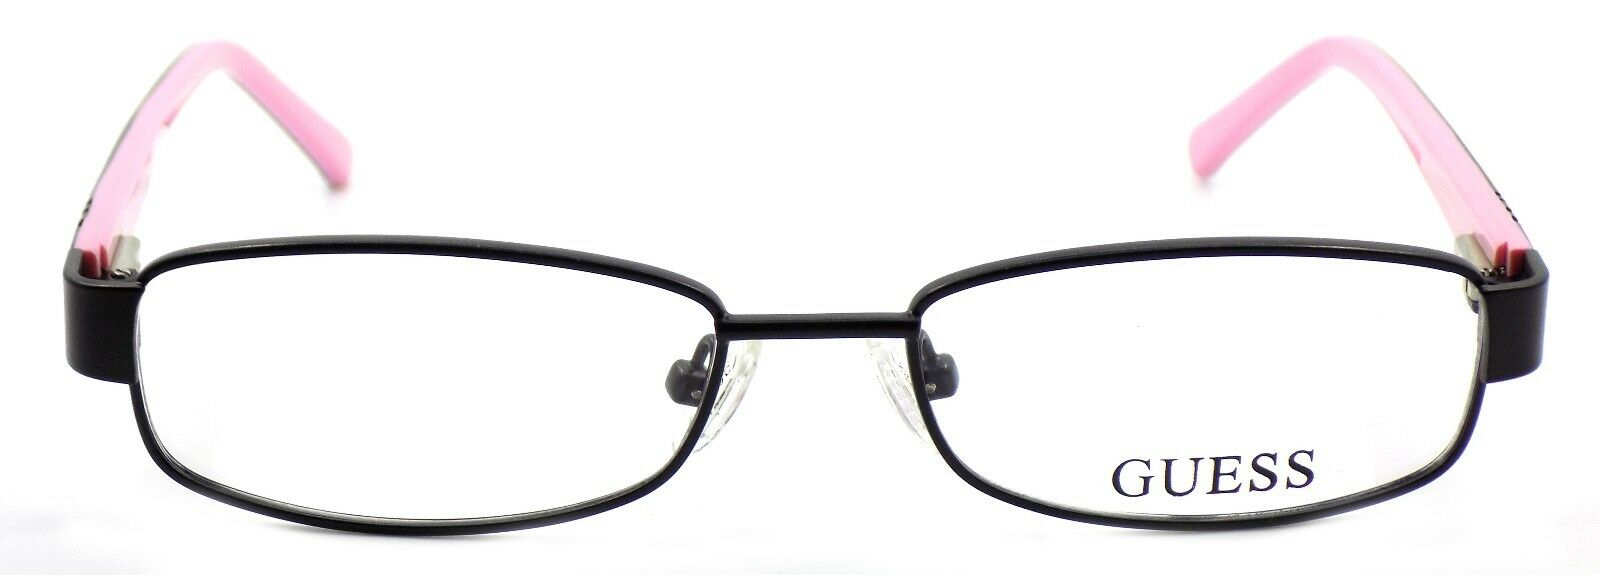 2-GUESS GU9127 BLK Girls Eyeglasses Frames 49-16-130 Black-715583033610-IKSpecs